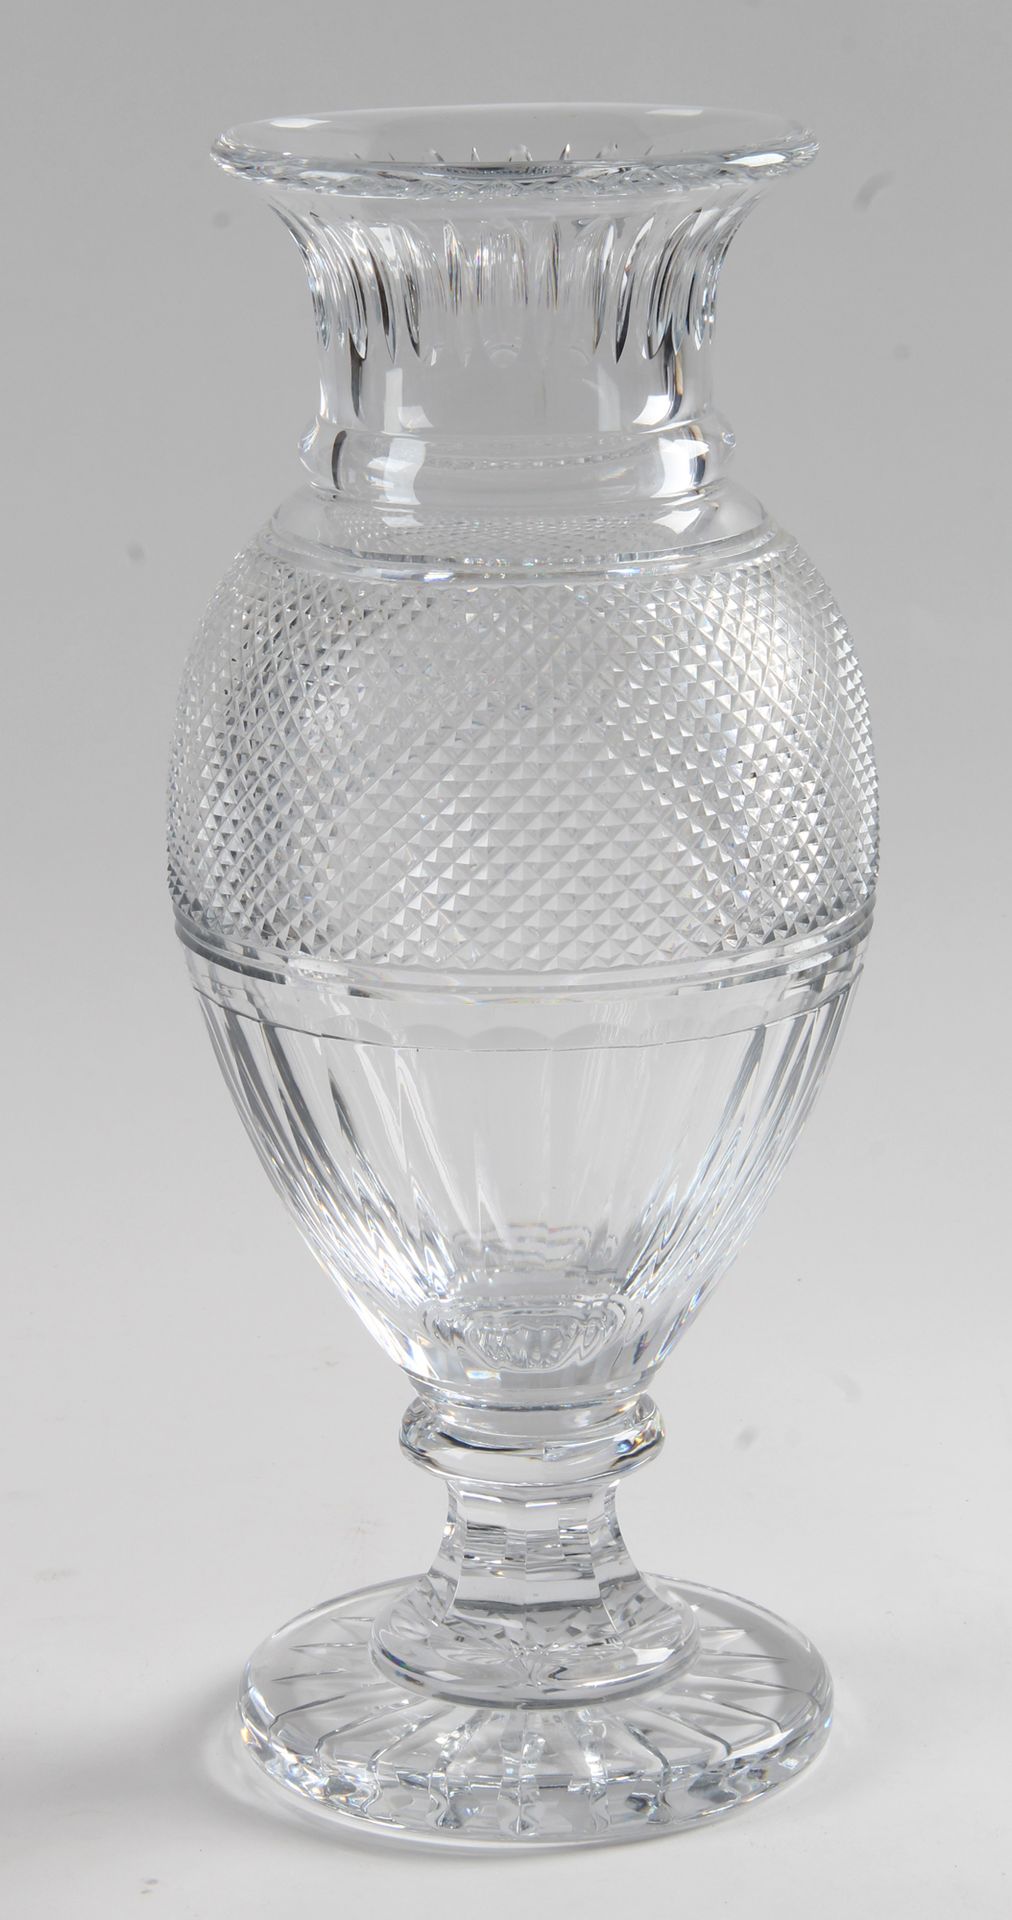 Null BACCARAT

大的钻石切割水晶花瓶放在一个基座上。 

携带 "巴卡拉水晶博物馆，1821-1840 "的徽章。

高度：50厘米